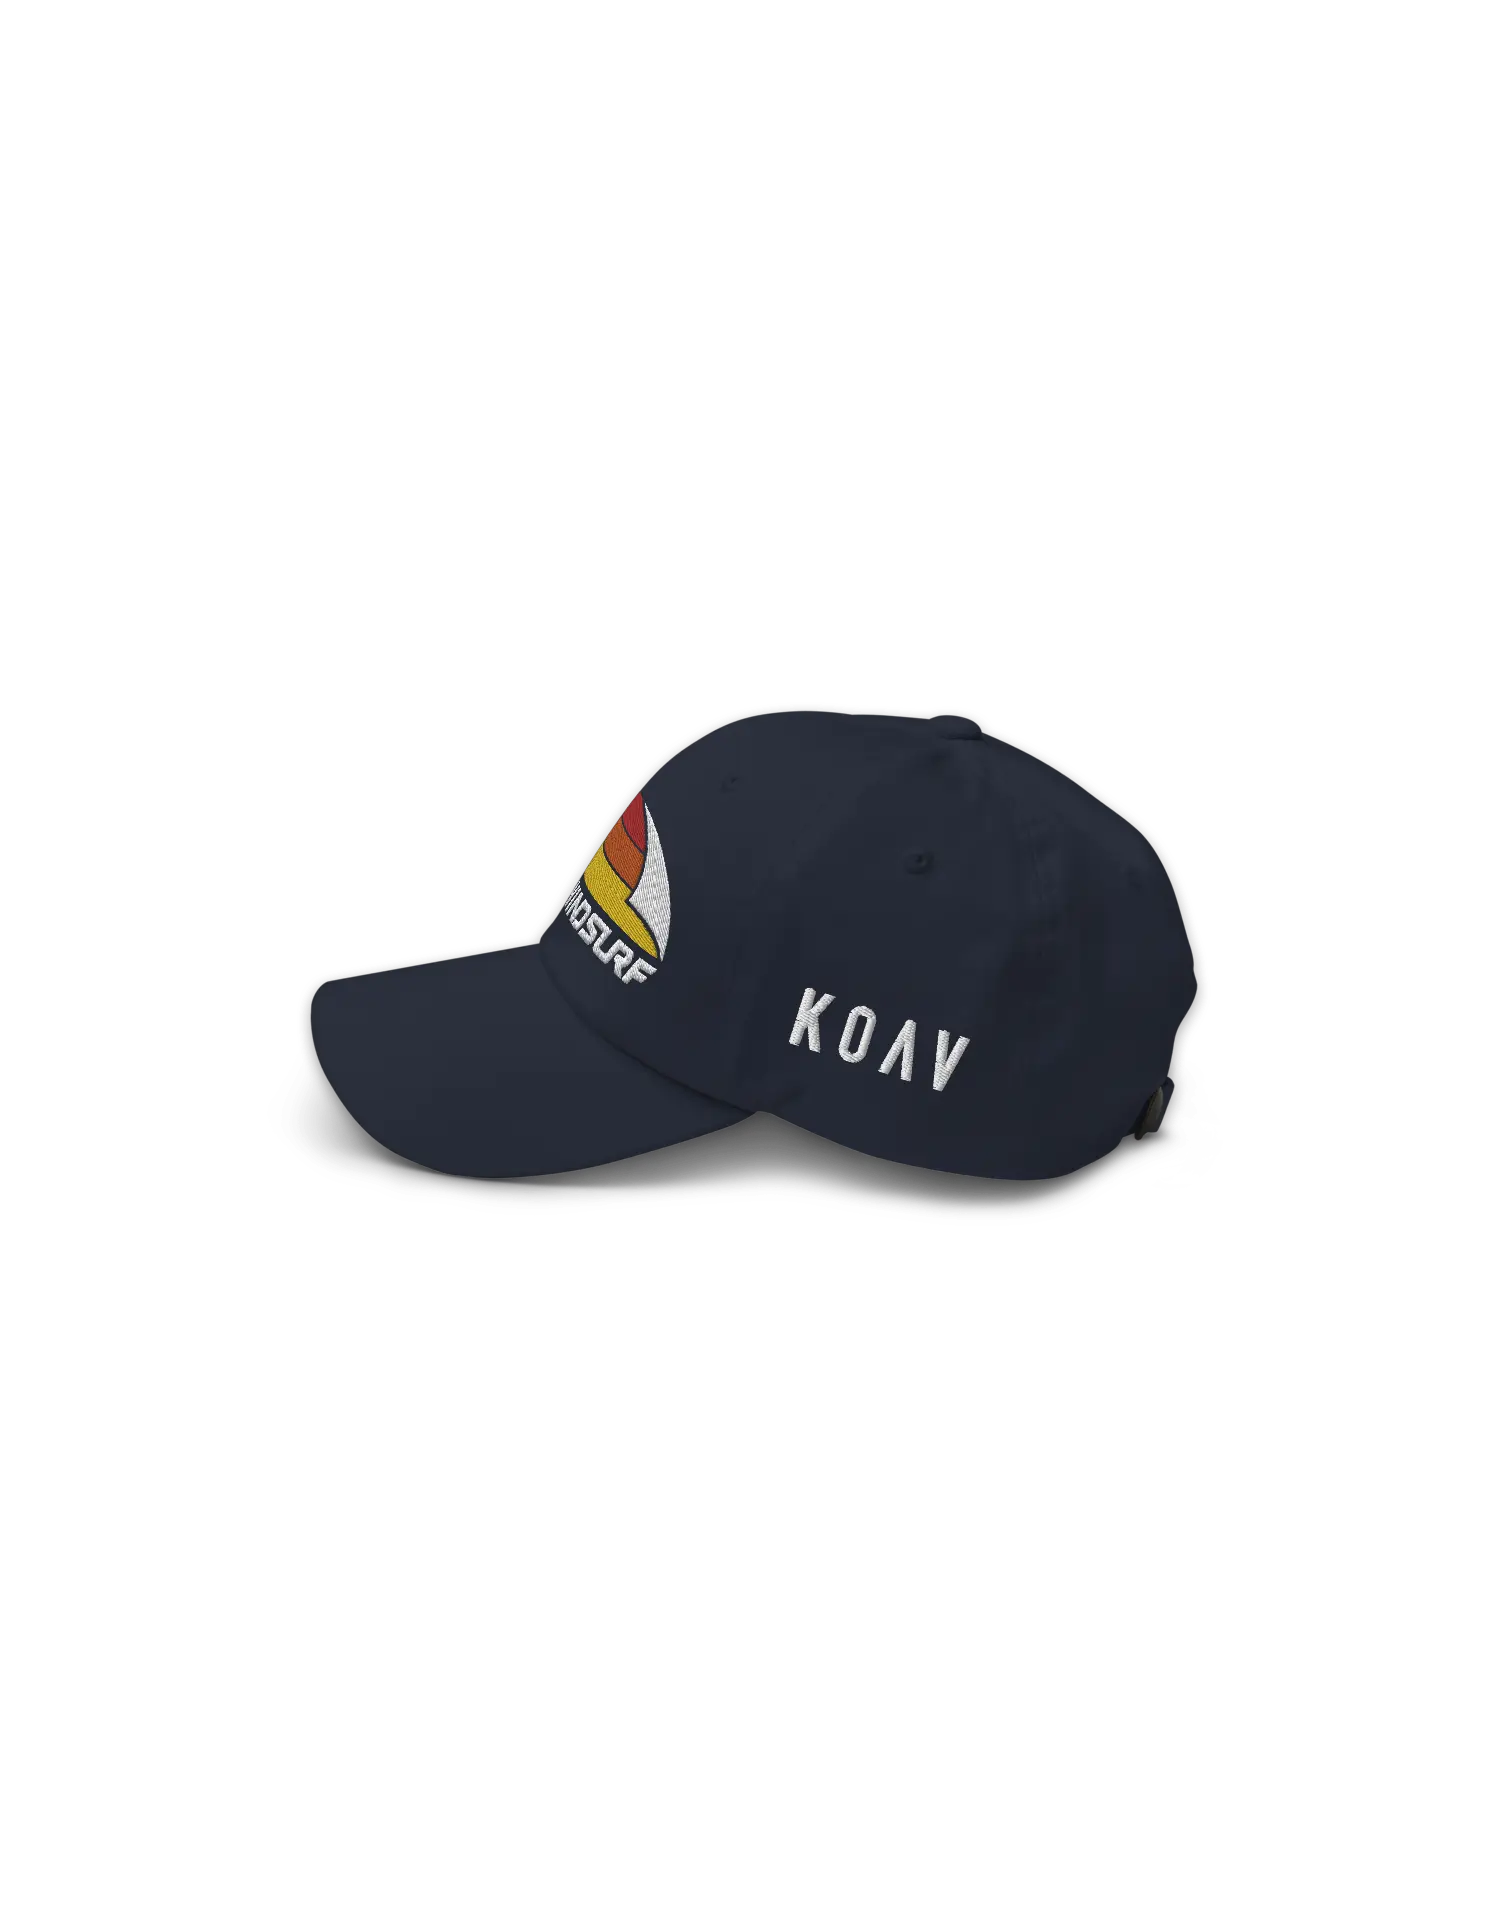 Windsurf Navy Dad Hat by KOAV